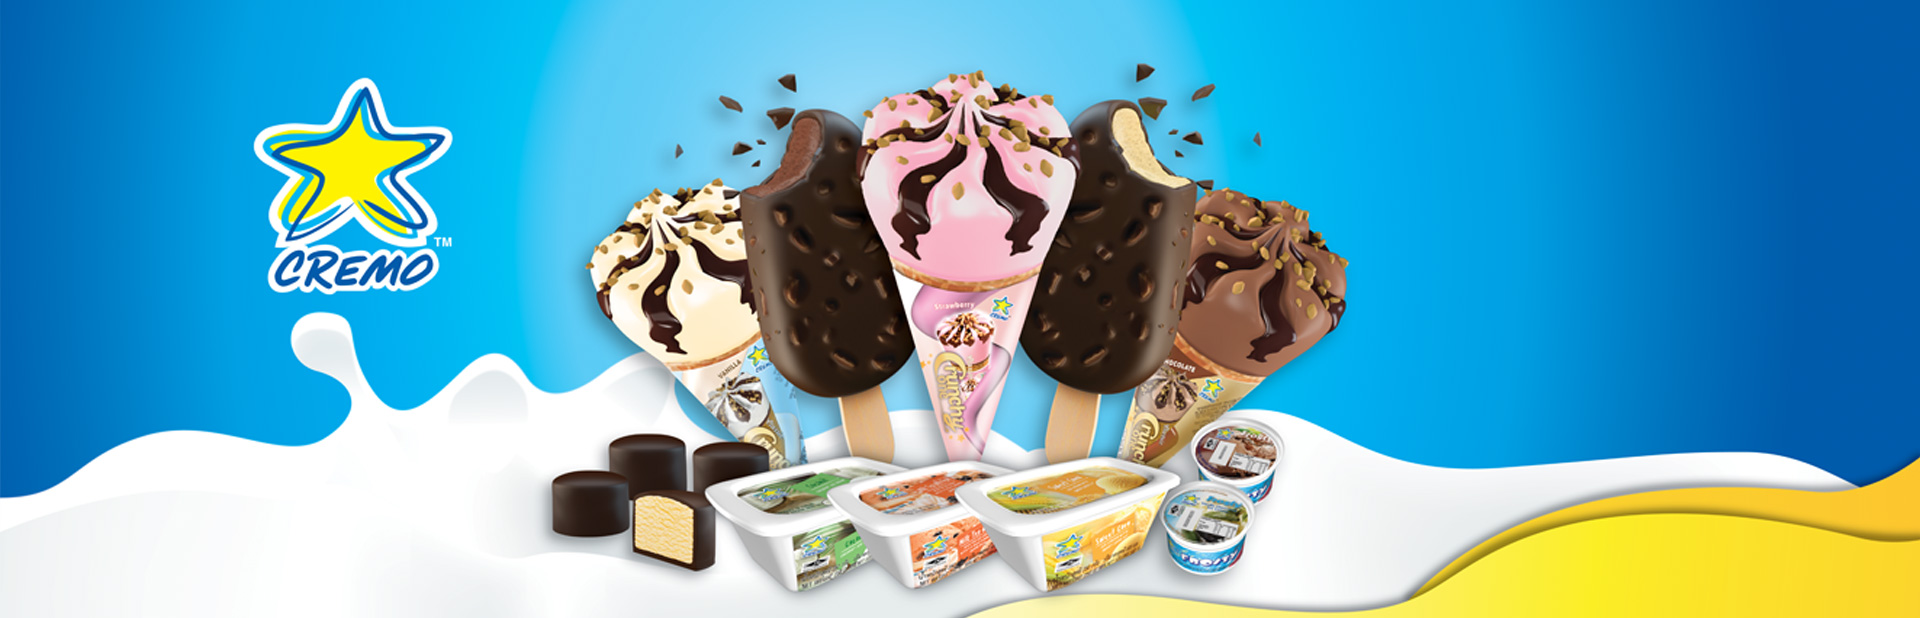 Cremo Ice Cream – The Taste of Happiness - MVO Marketing - Ice Cream Supplier Singapore